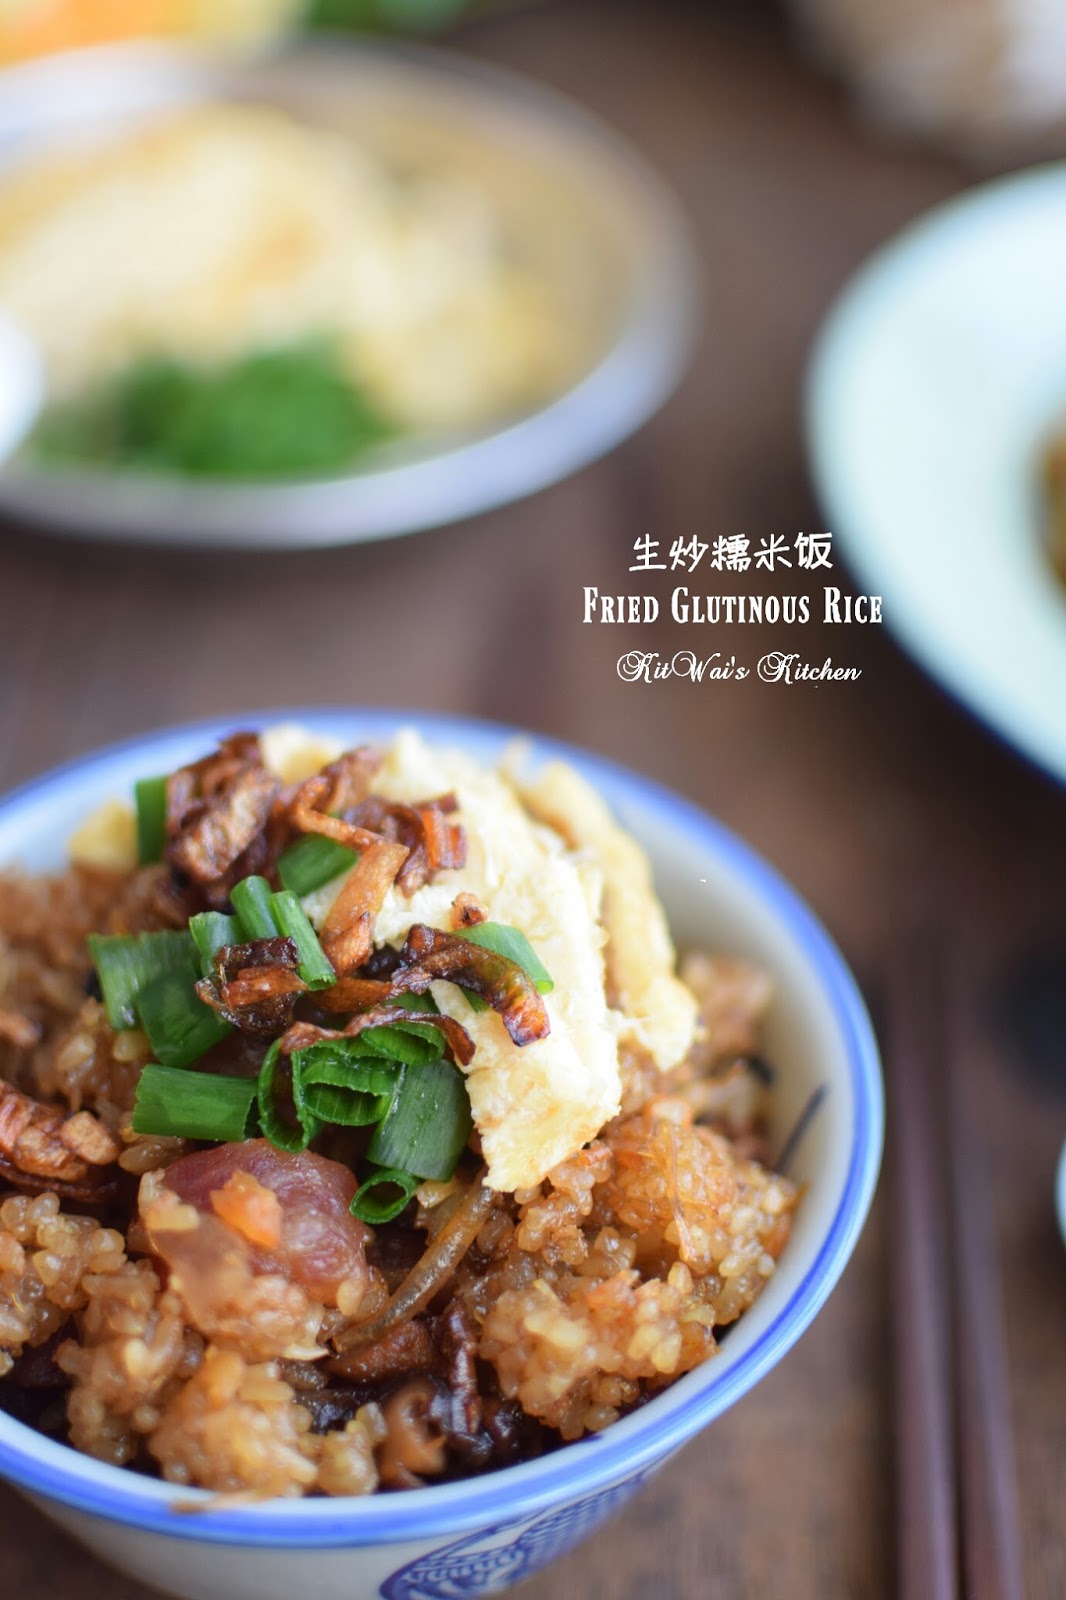 Kit Wai's kitchen : 生炒糯米饭 ~ Stir-fried Glutinous Rice